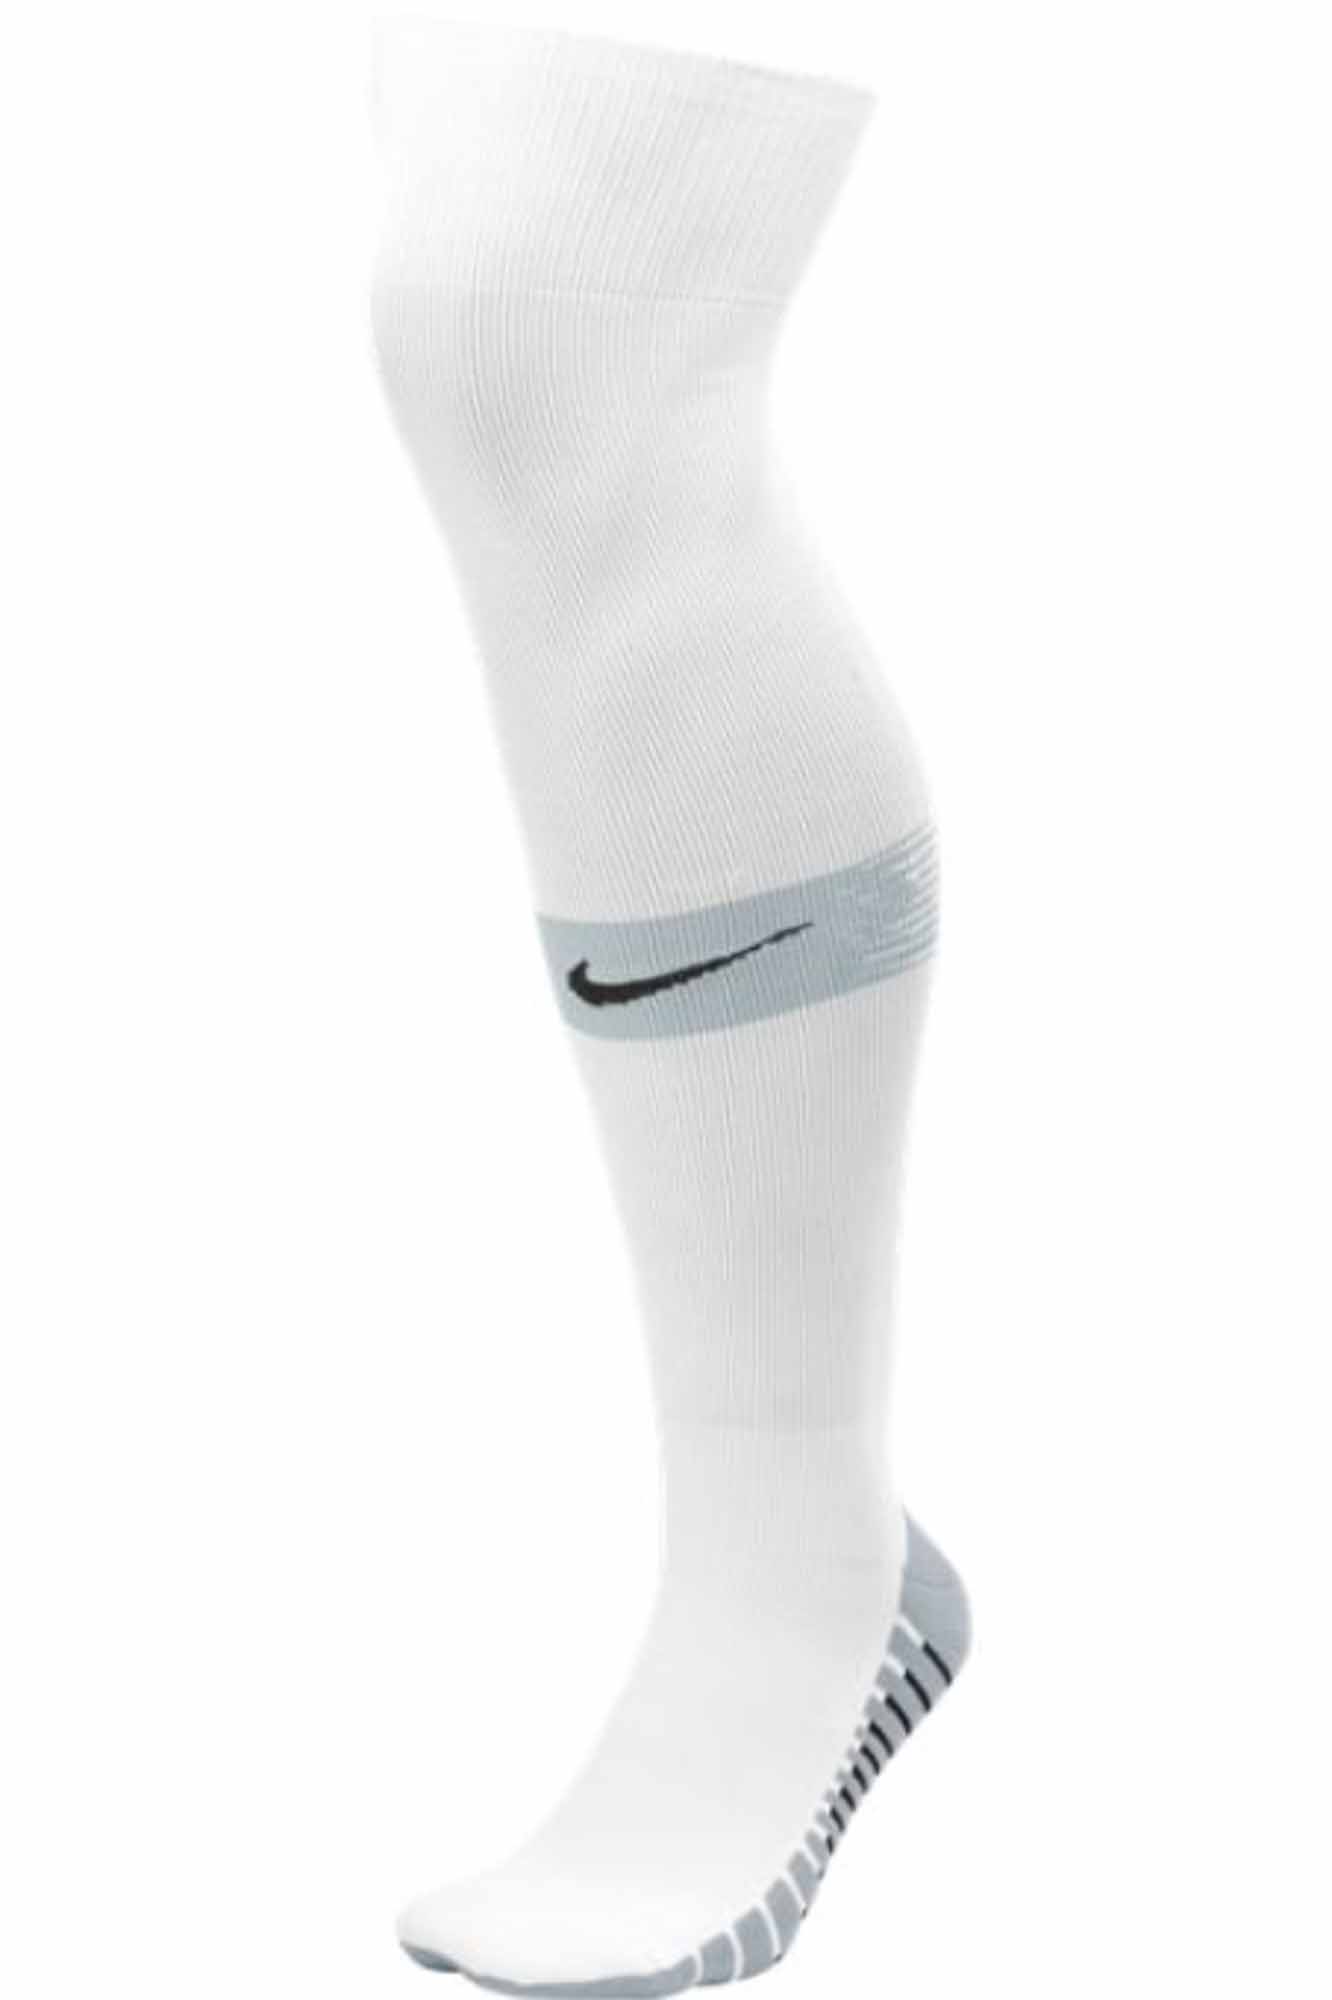 nike match fit soccer socks